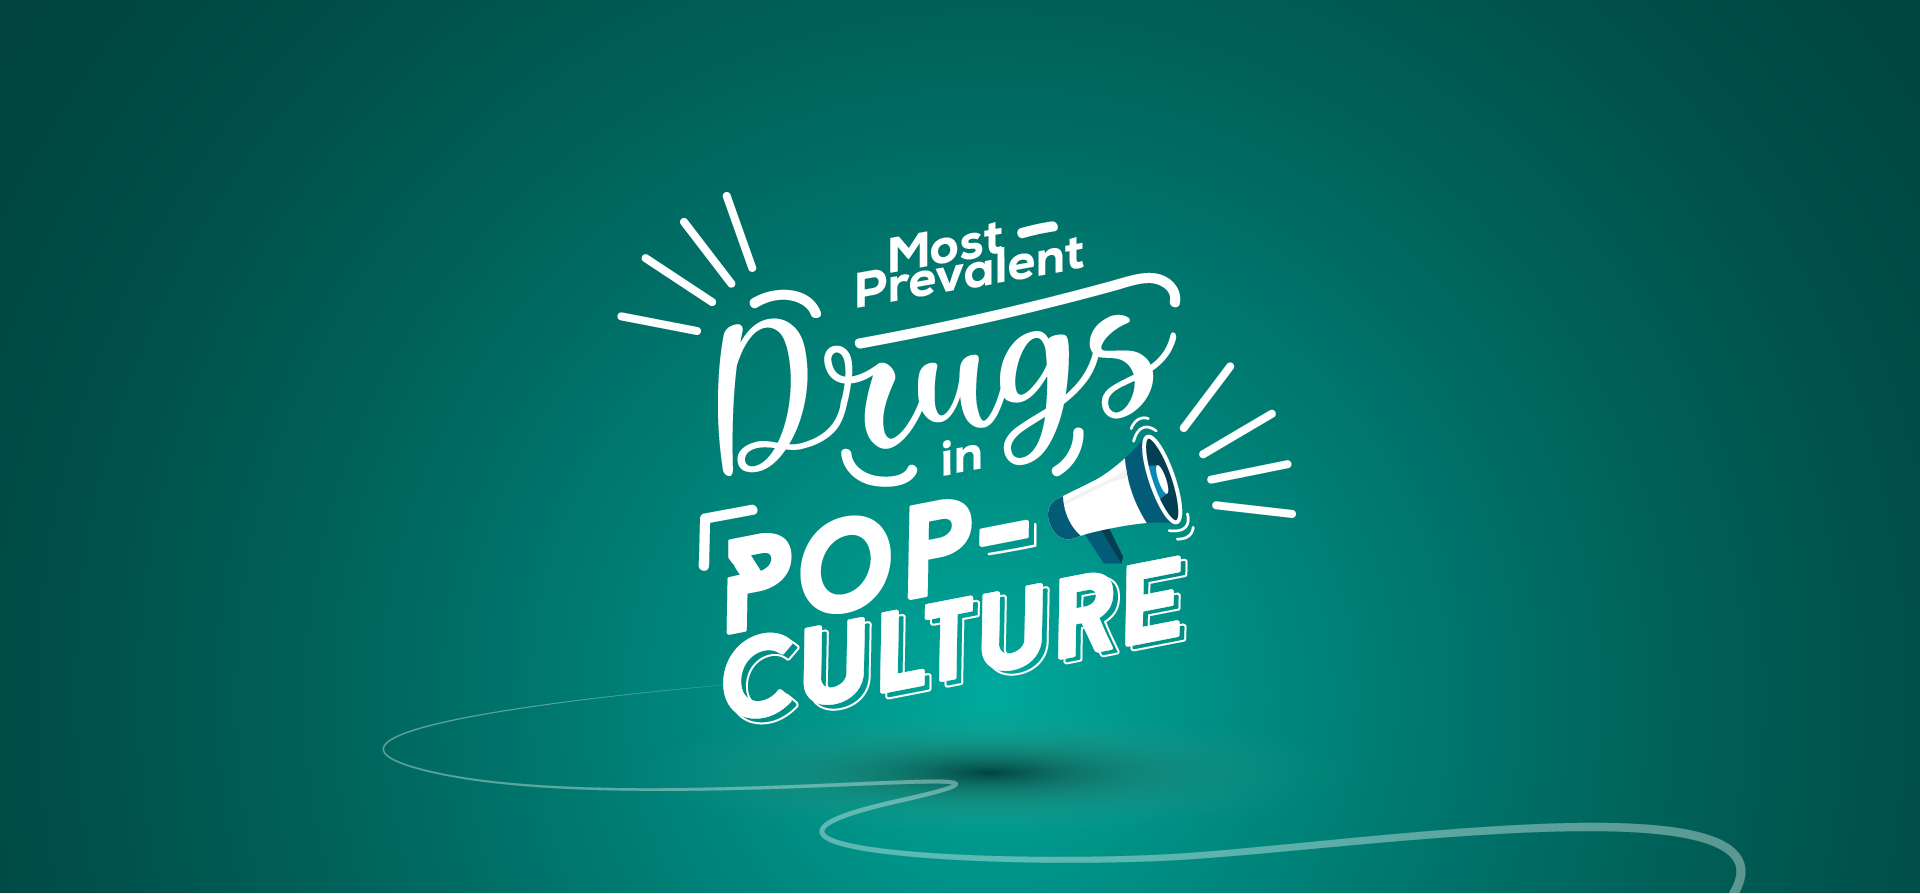 drugs-in-popular-culture-header